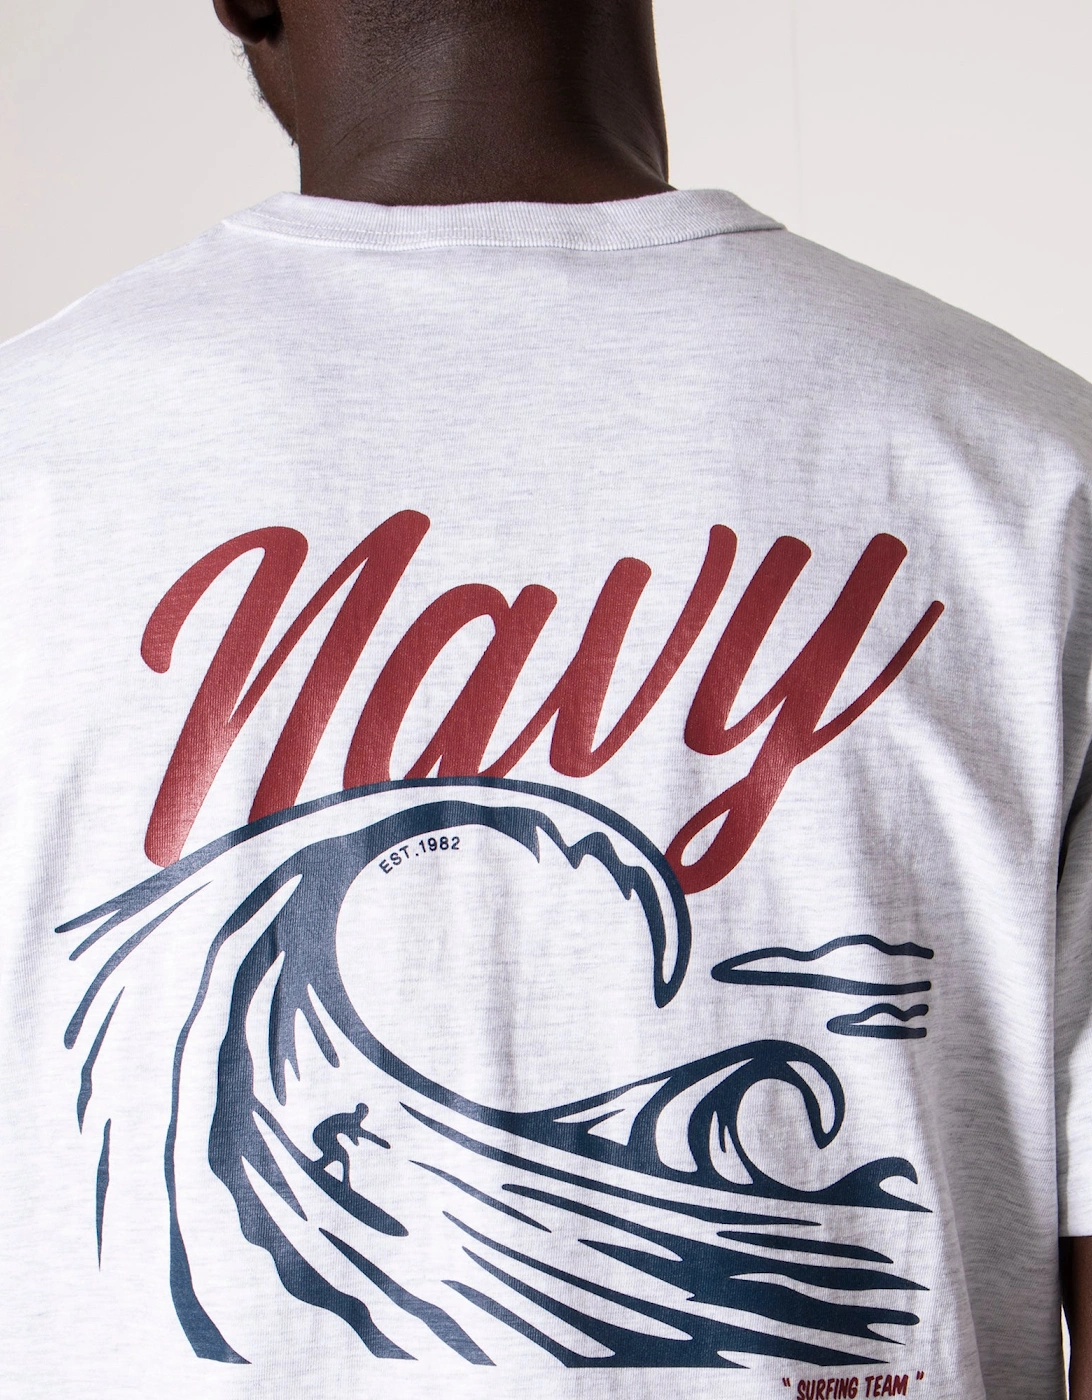 Navy Wave T-Shirt